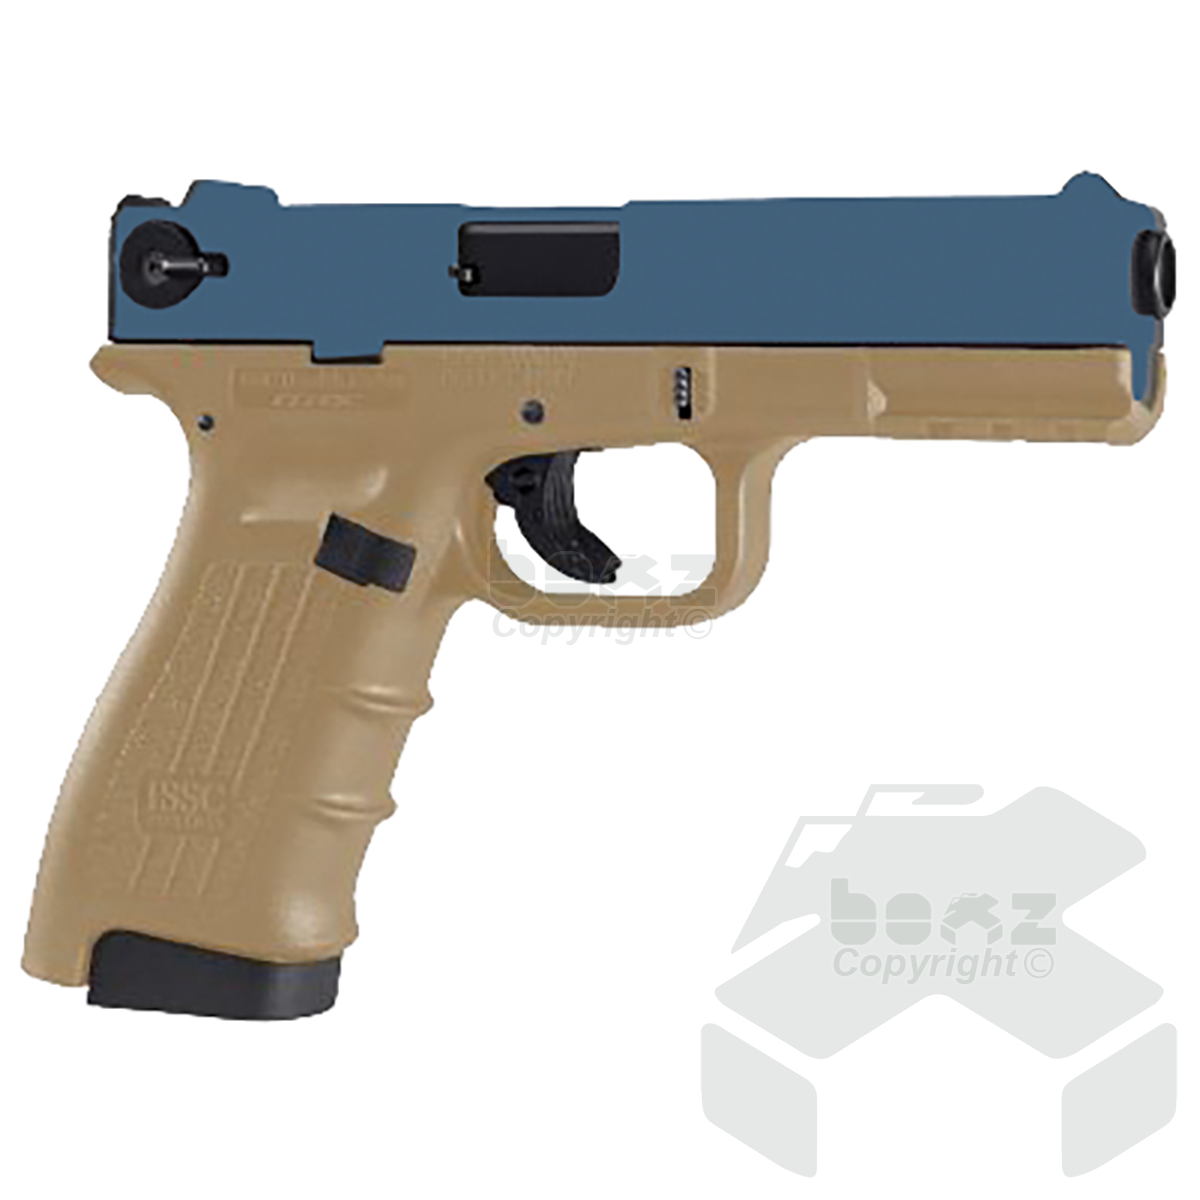 Ceonic M22 Blank Firing Pistol - 9mm - Blue Wilderness